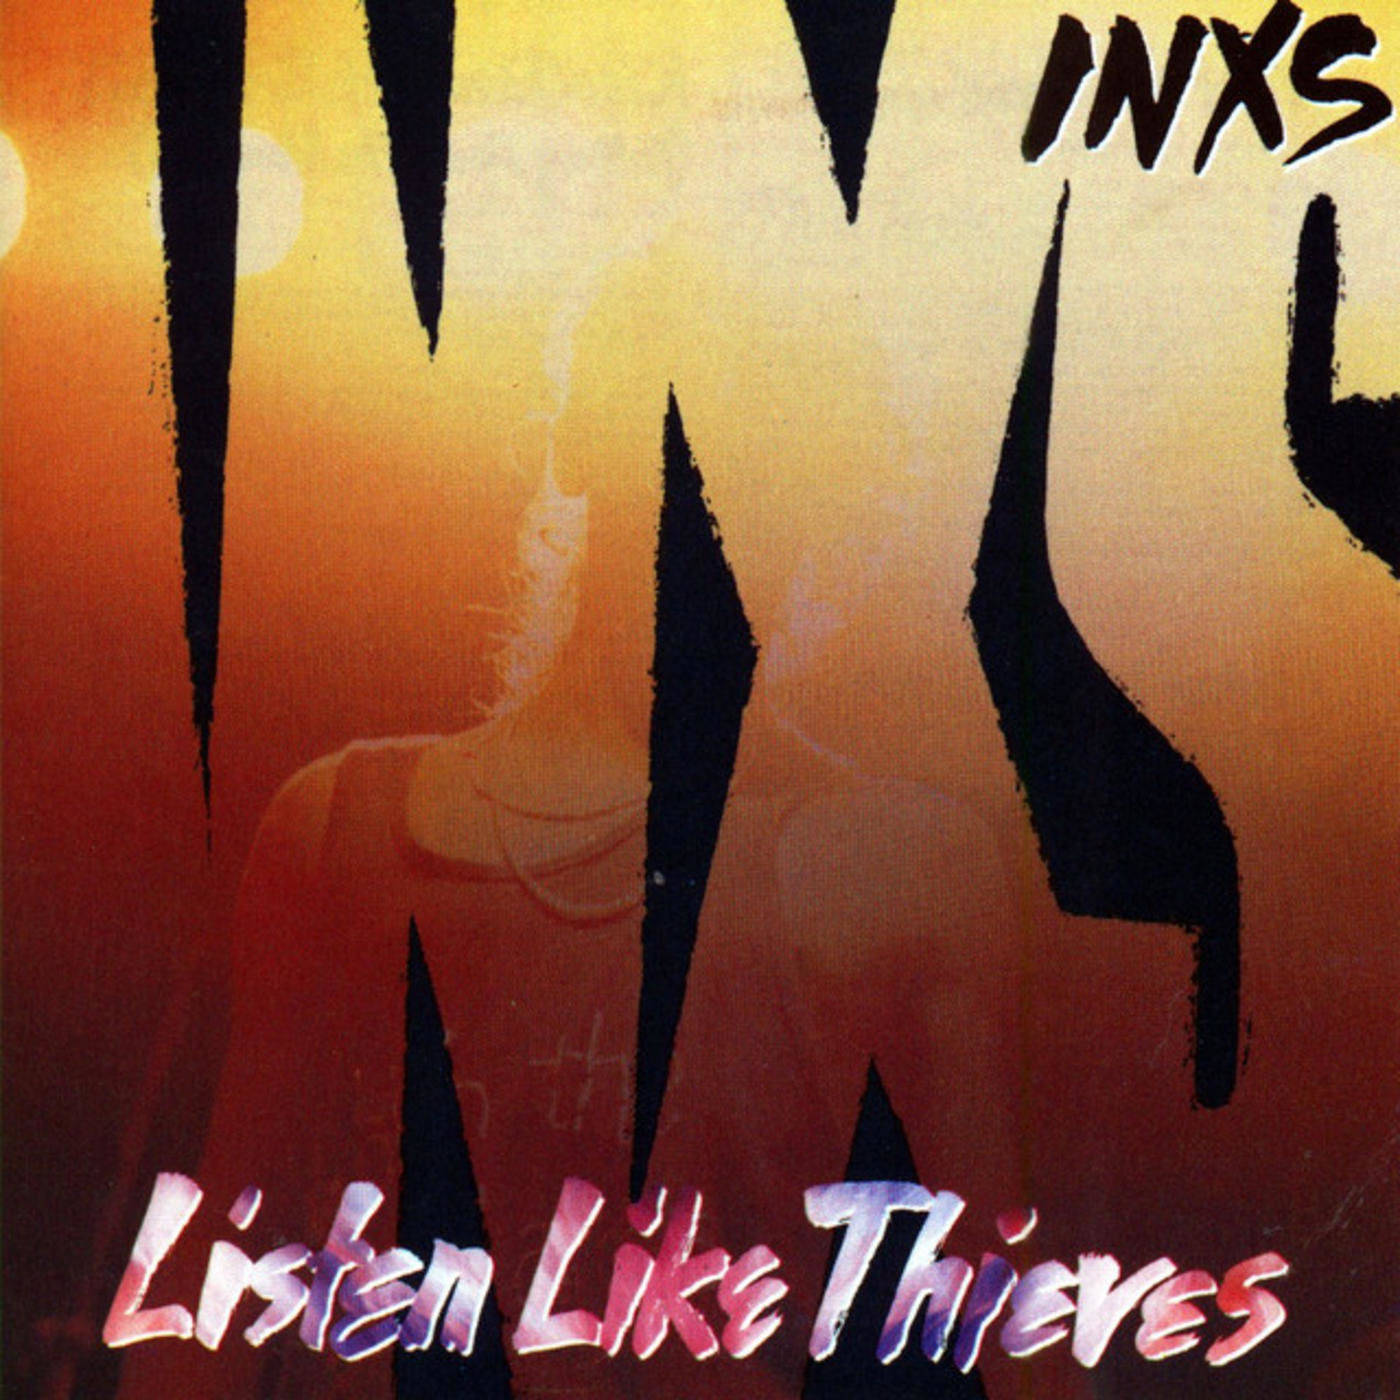 inxs 1984 tour